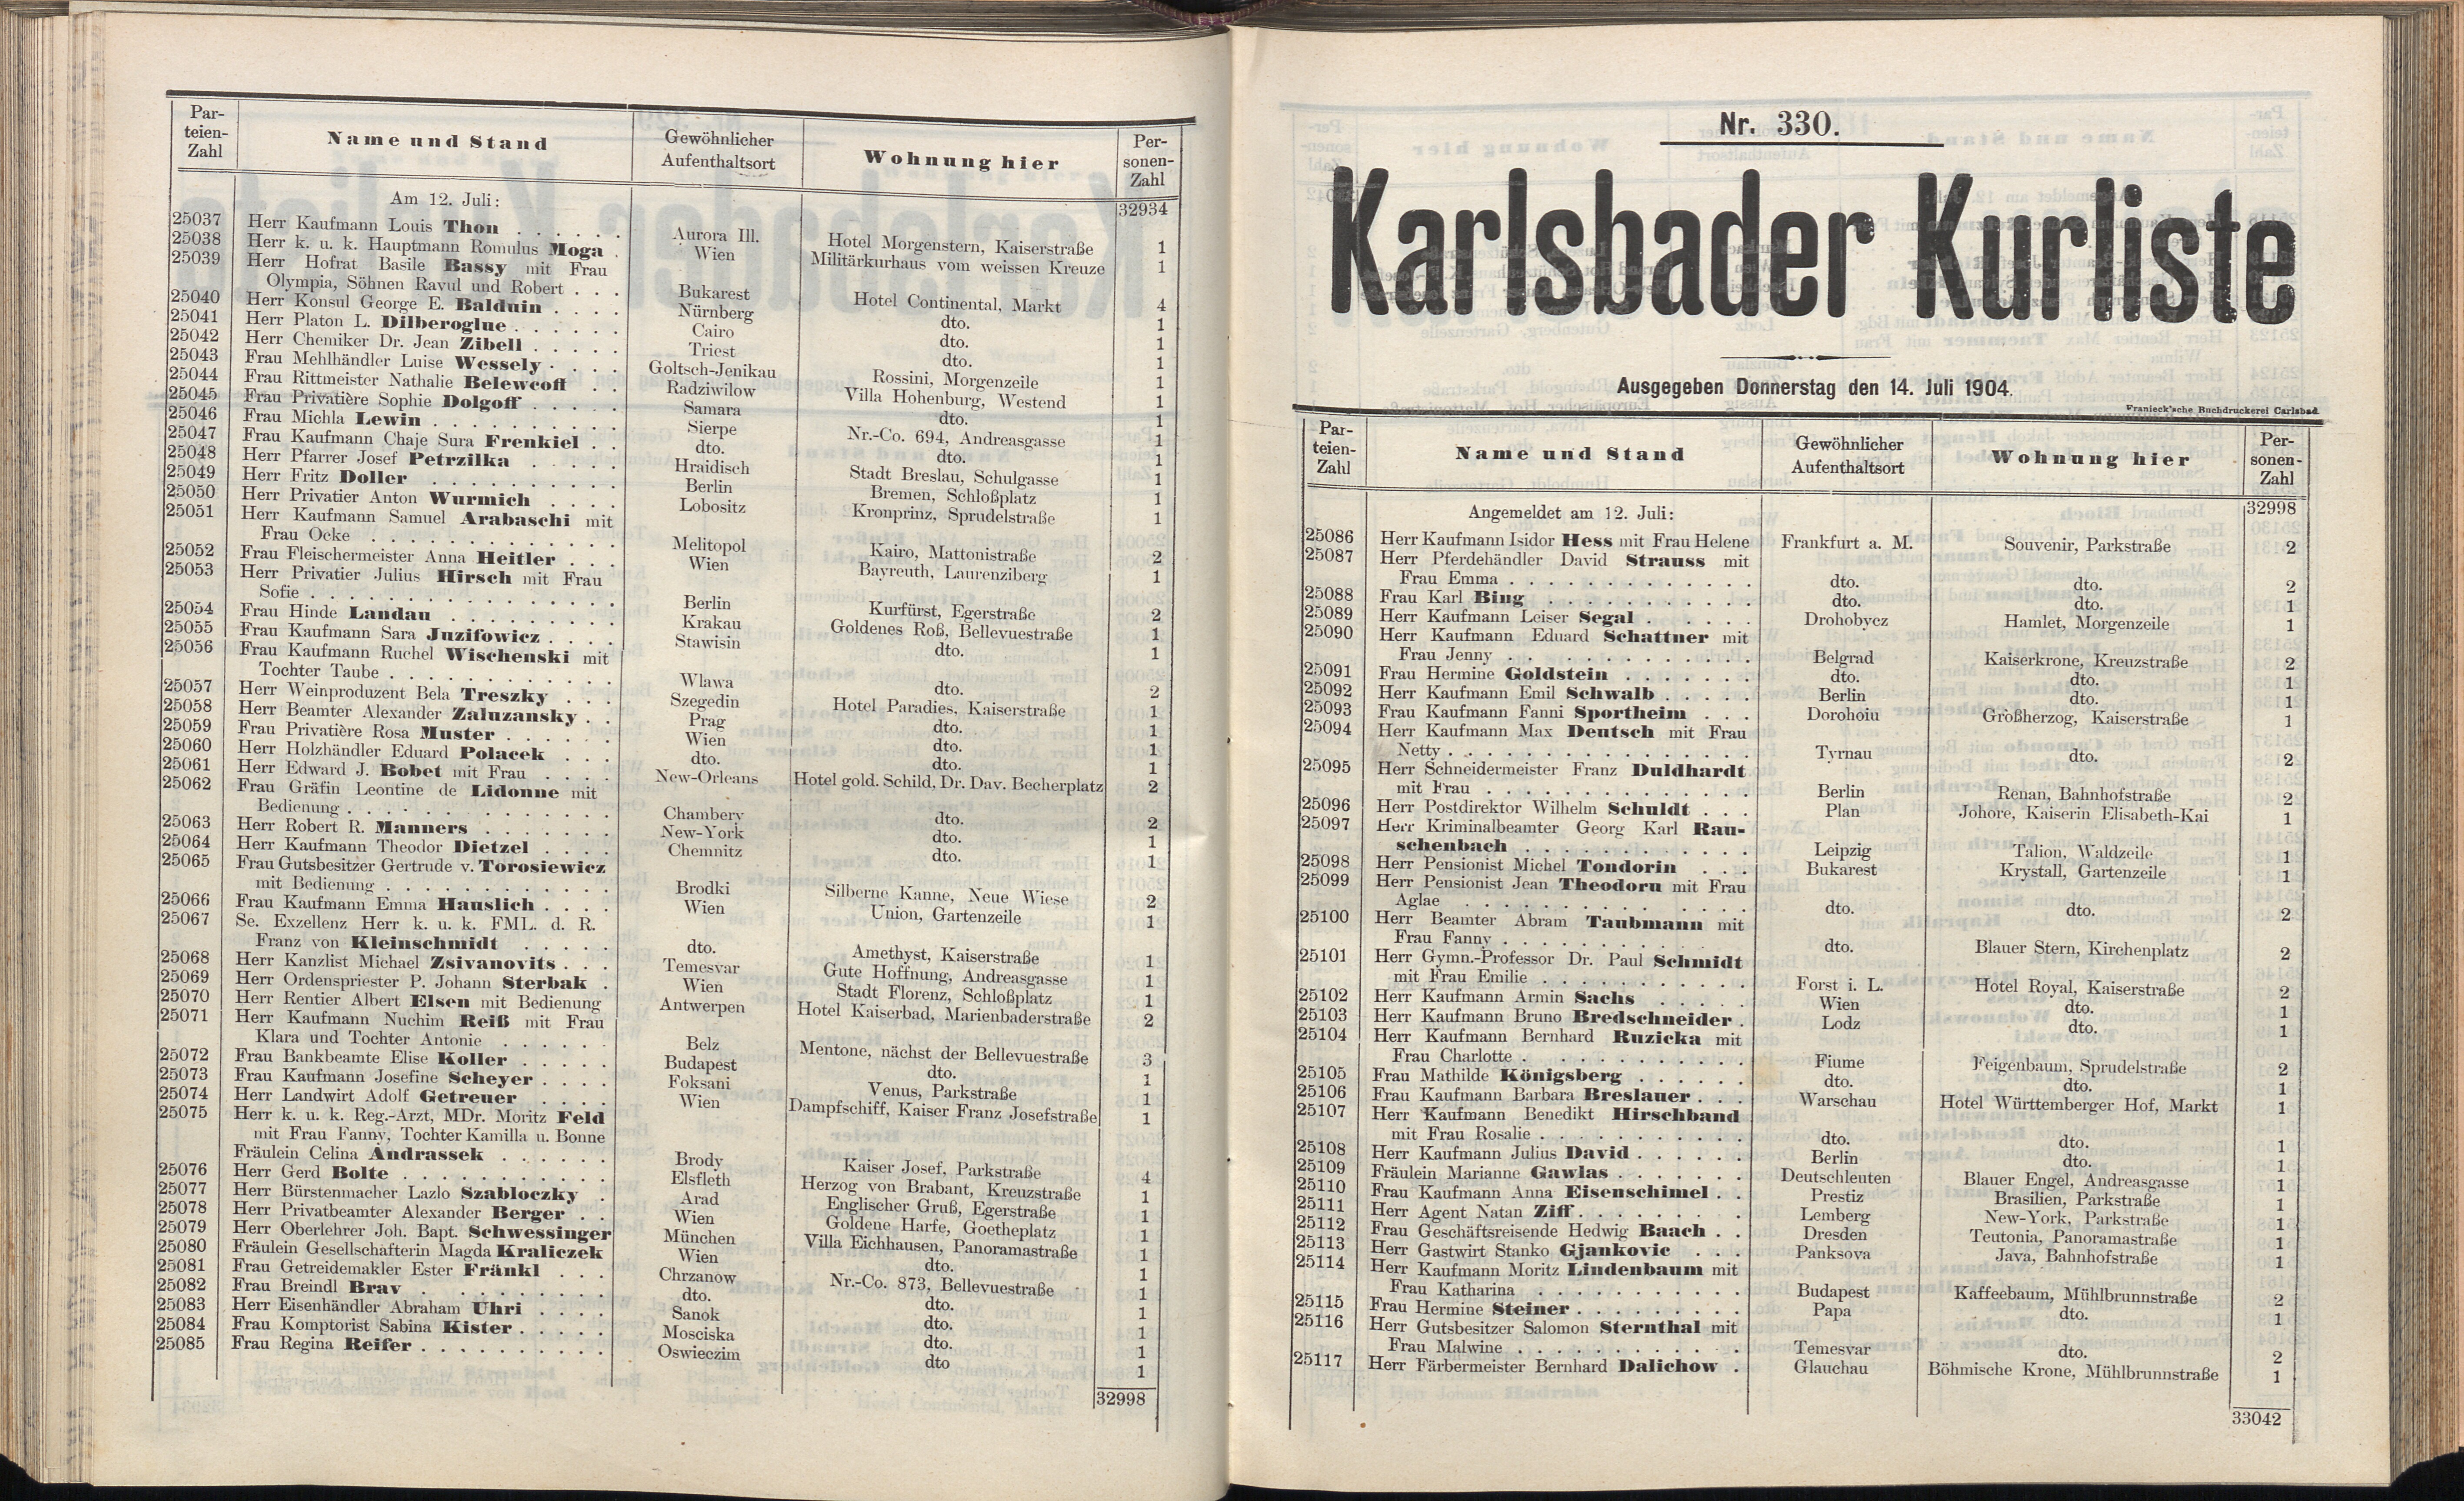 352. soap-kv_knihovna_karlsbader-kurliste-1904_3530